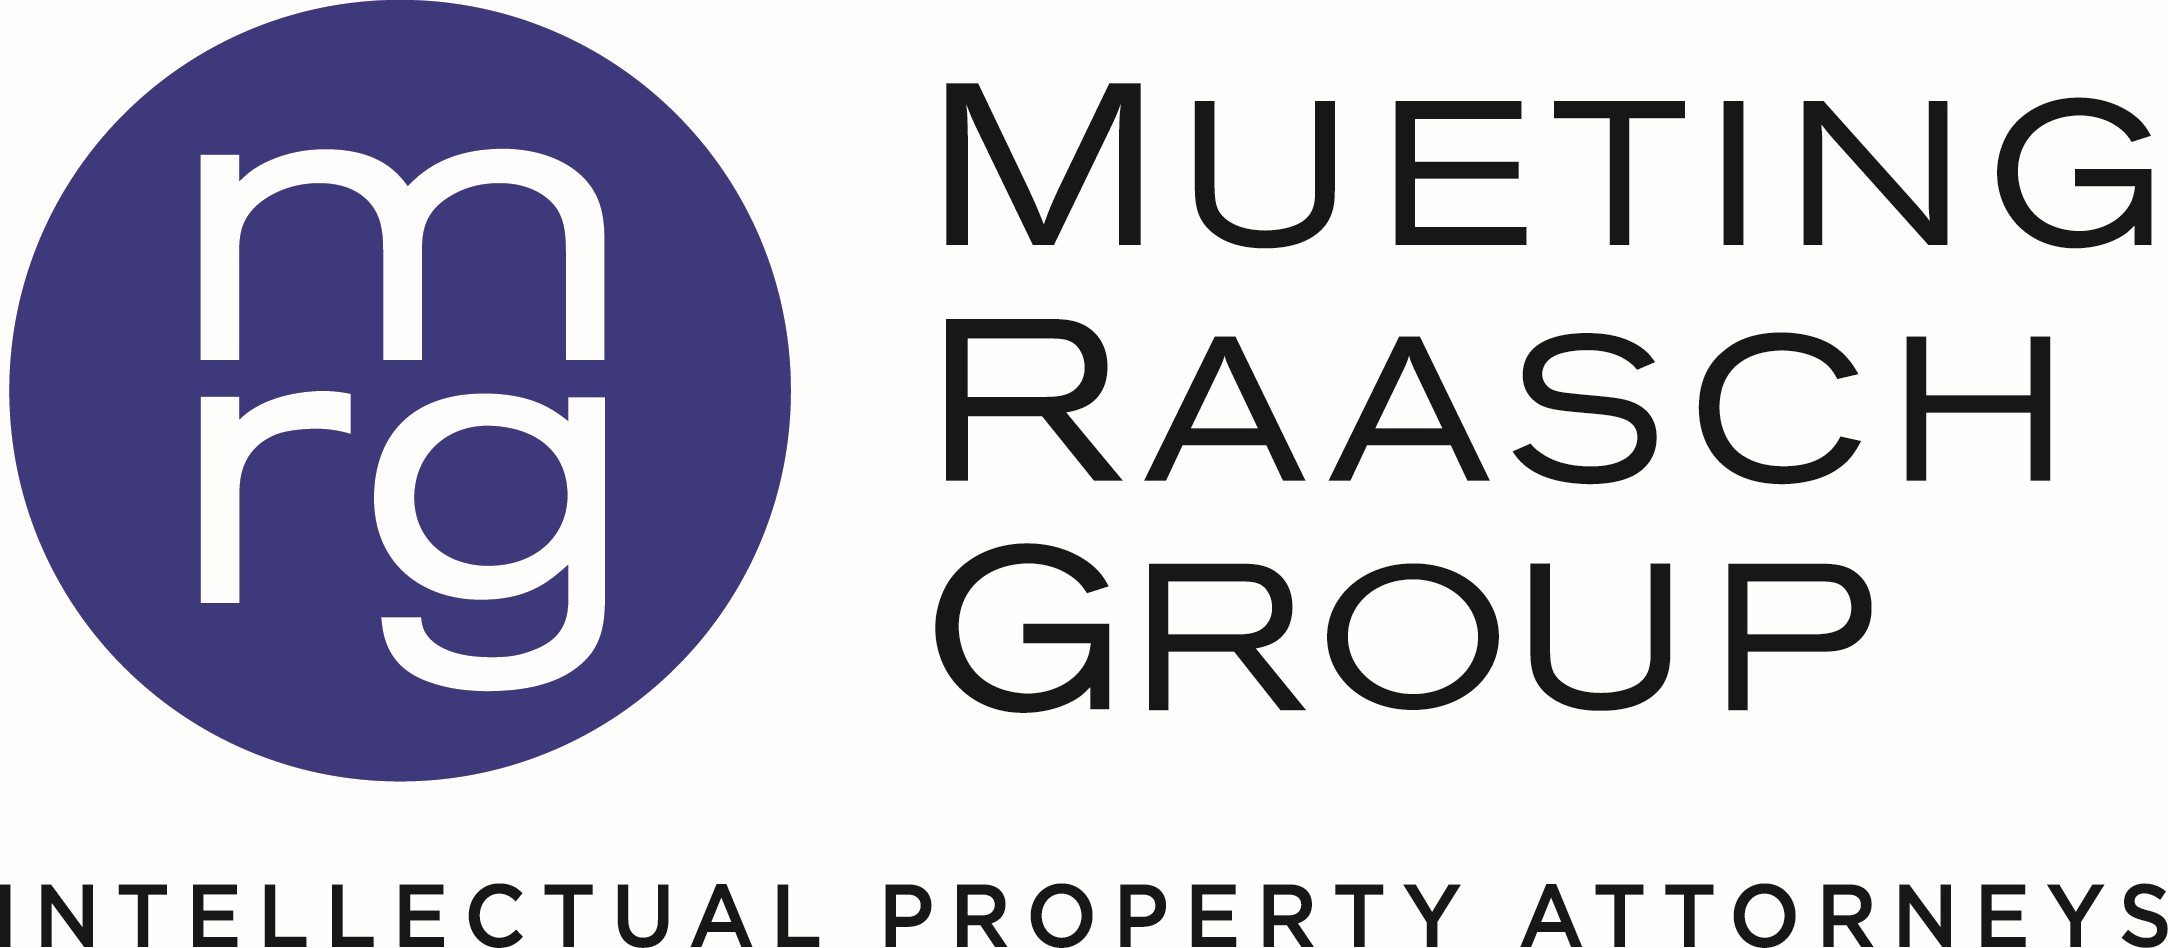 Mueting Raasch Group